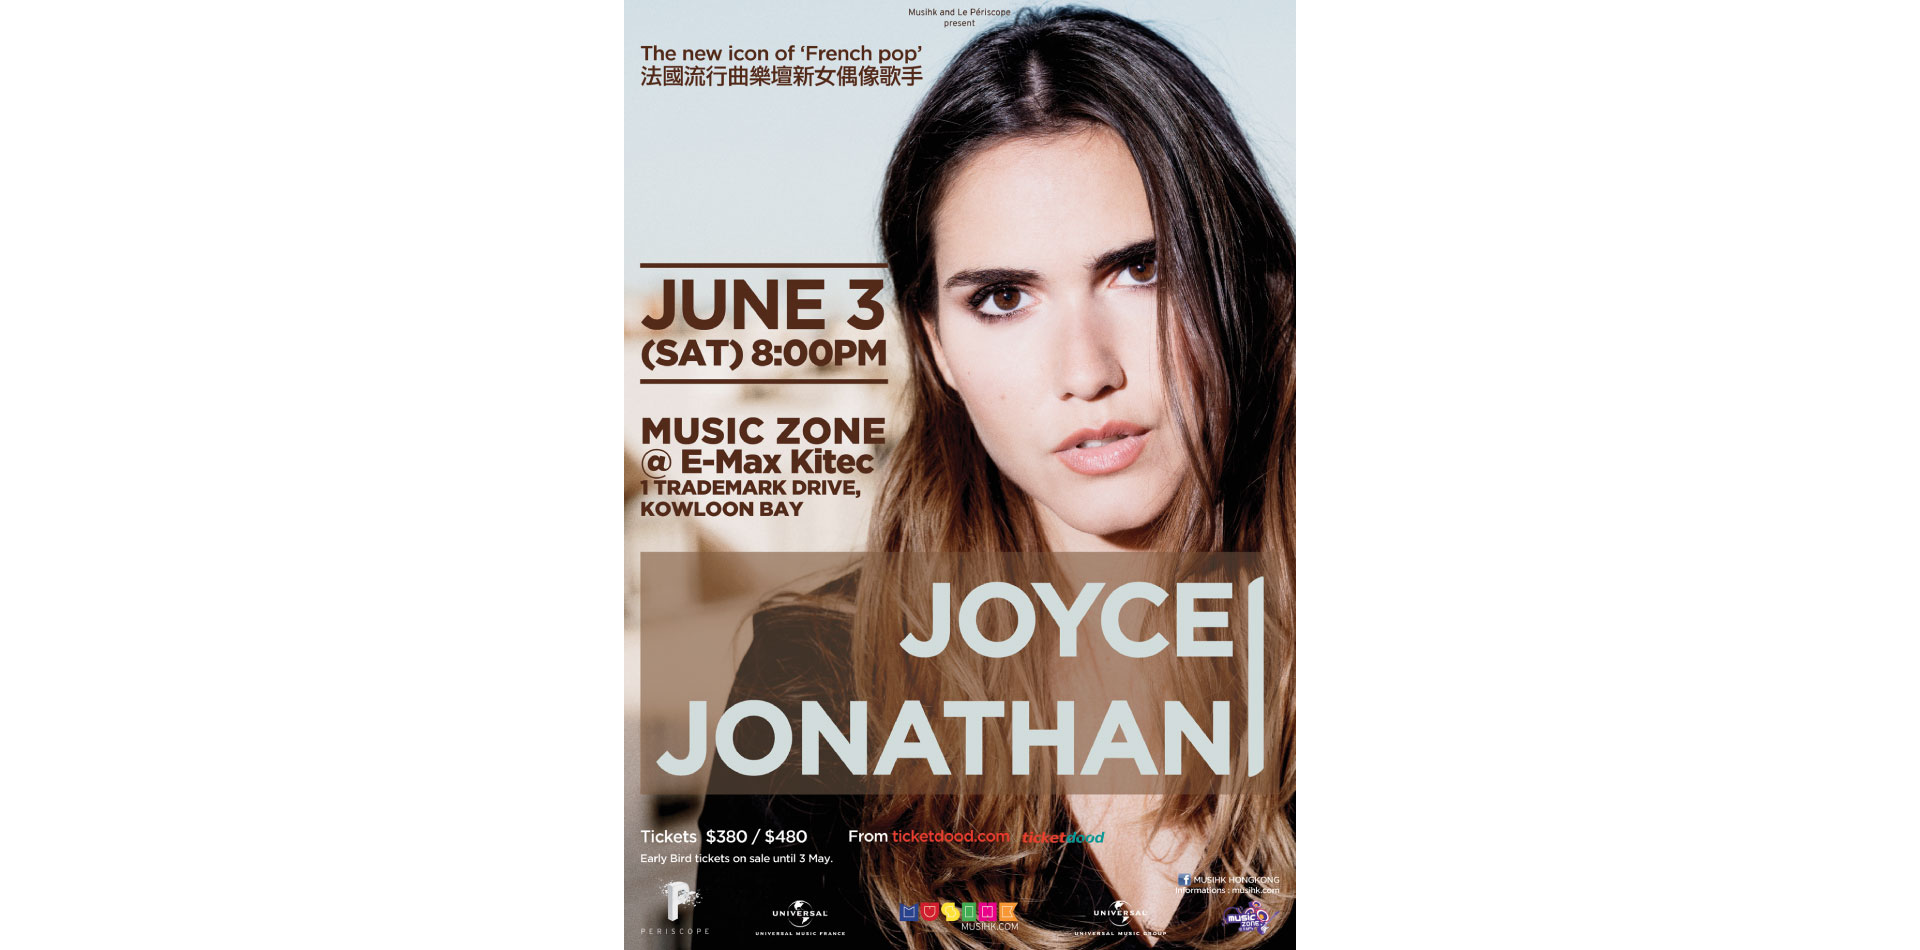 Joyce Jonathan - Asian Tour 2017